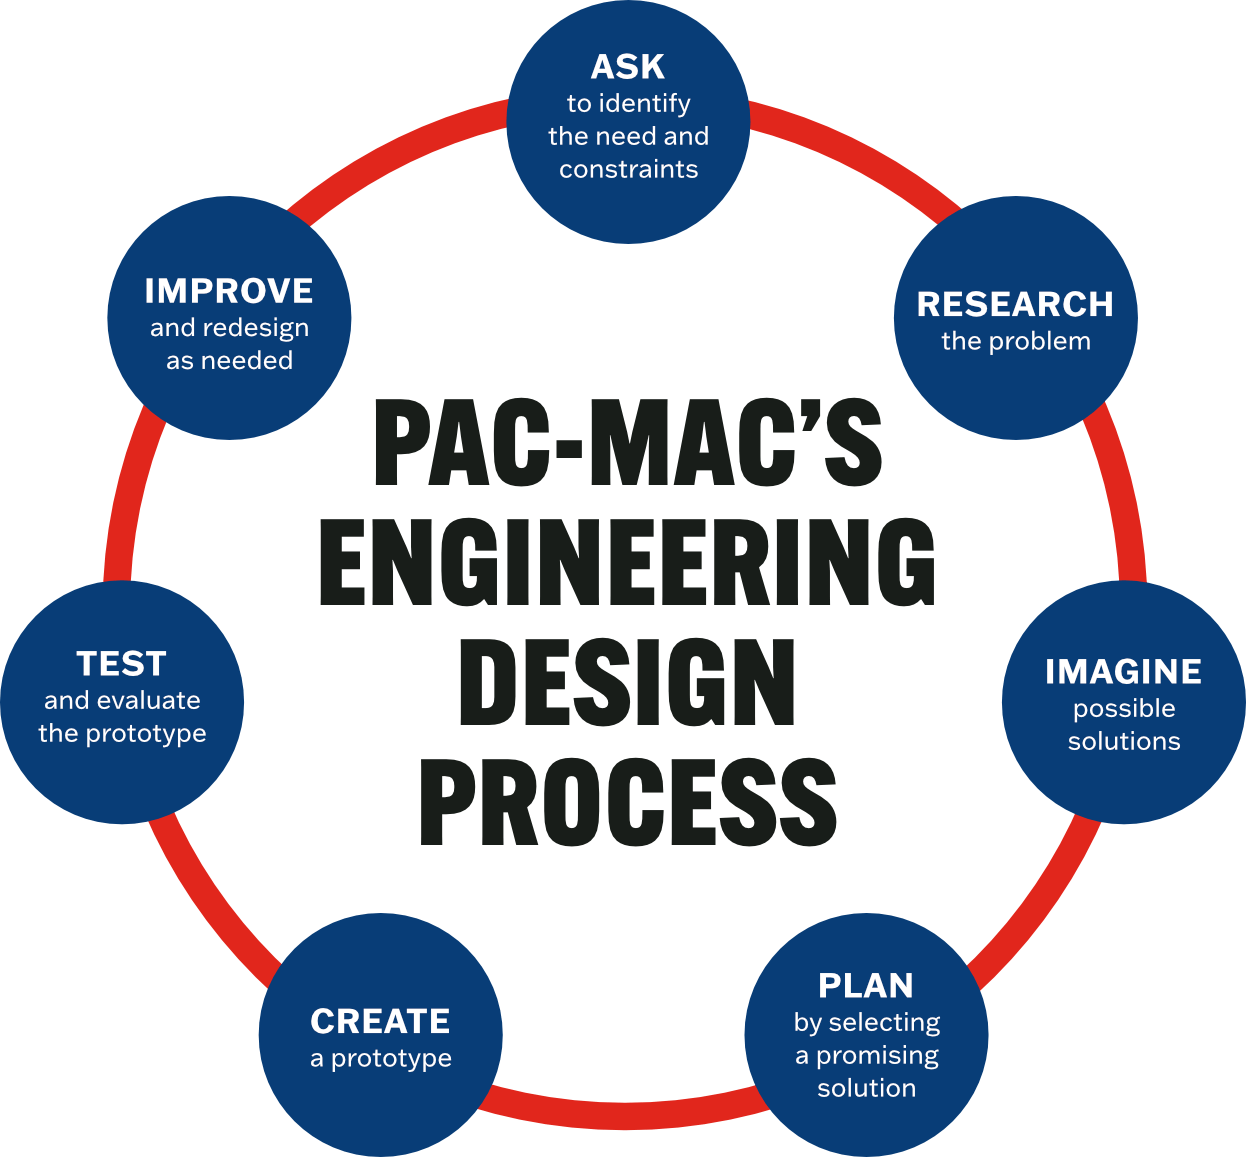 Pac-Mac's Engineering Design Process graphic